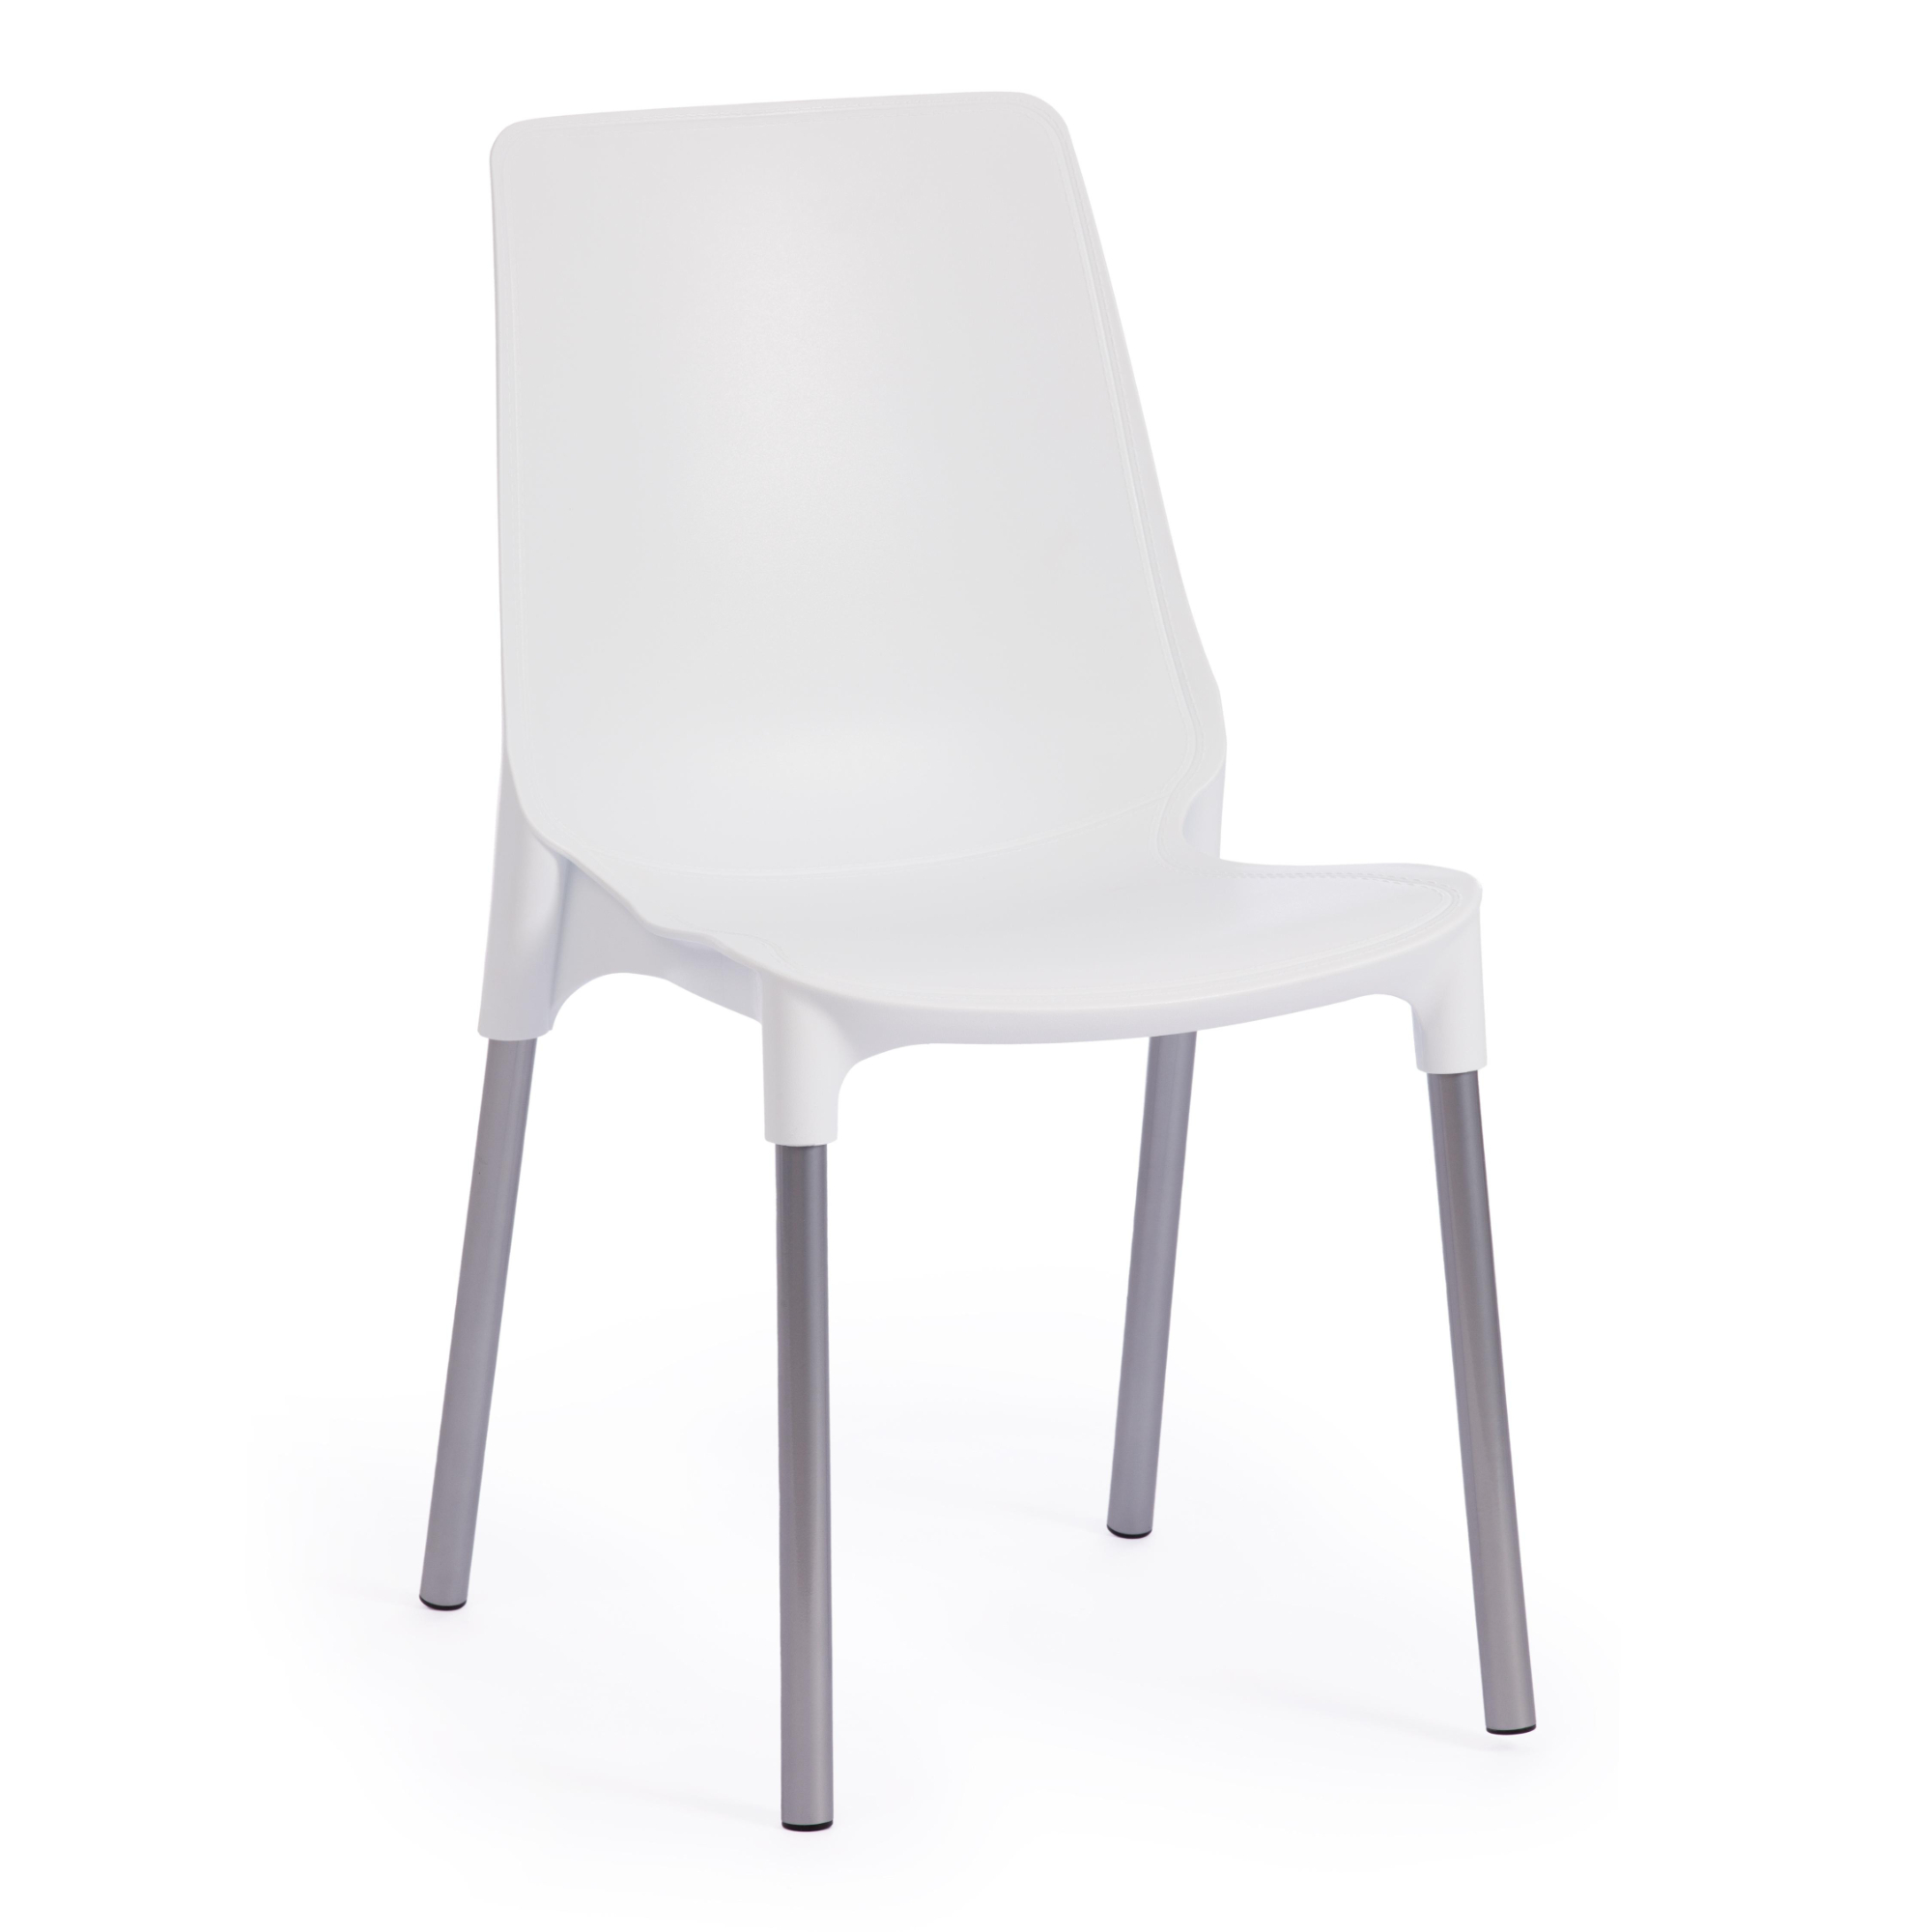 Стул ТС Genius пластиковый белый с хромированными ножками 46х56х84 см стул тс cindy chair пластиковый с ножками из бука бежевый 45х51х82 см